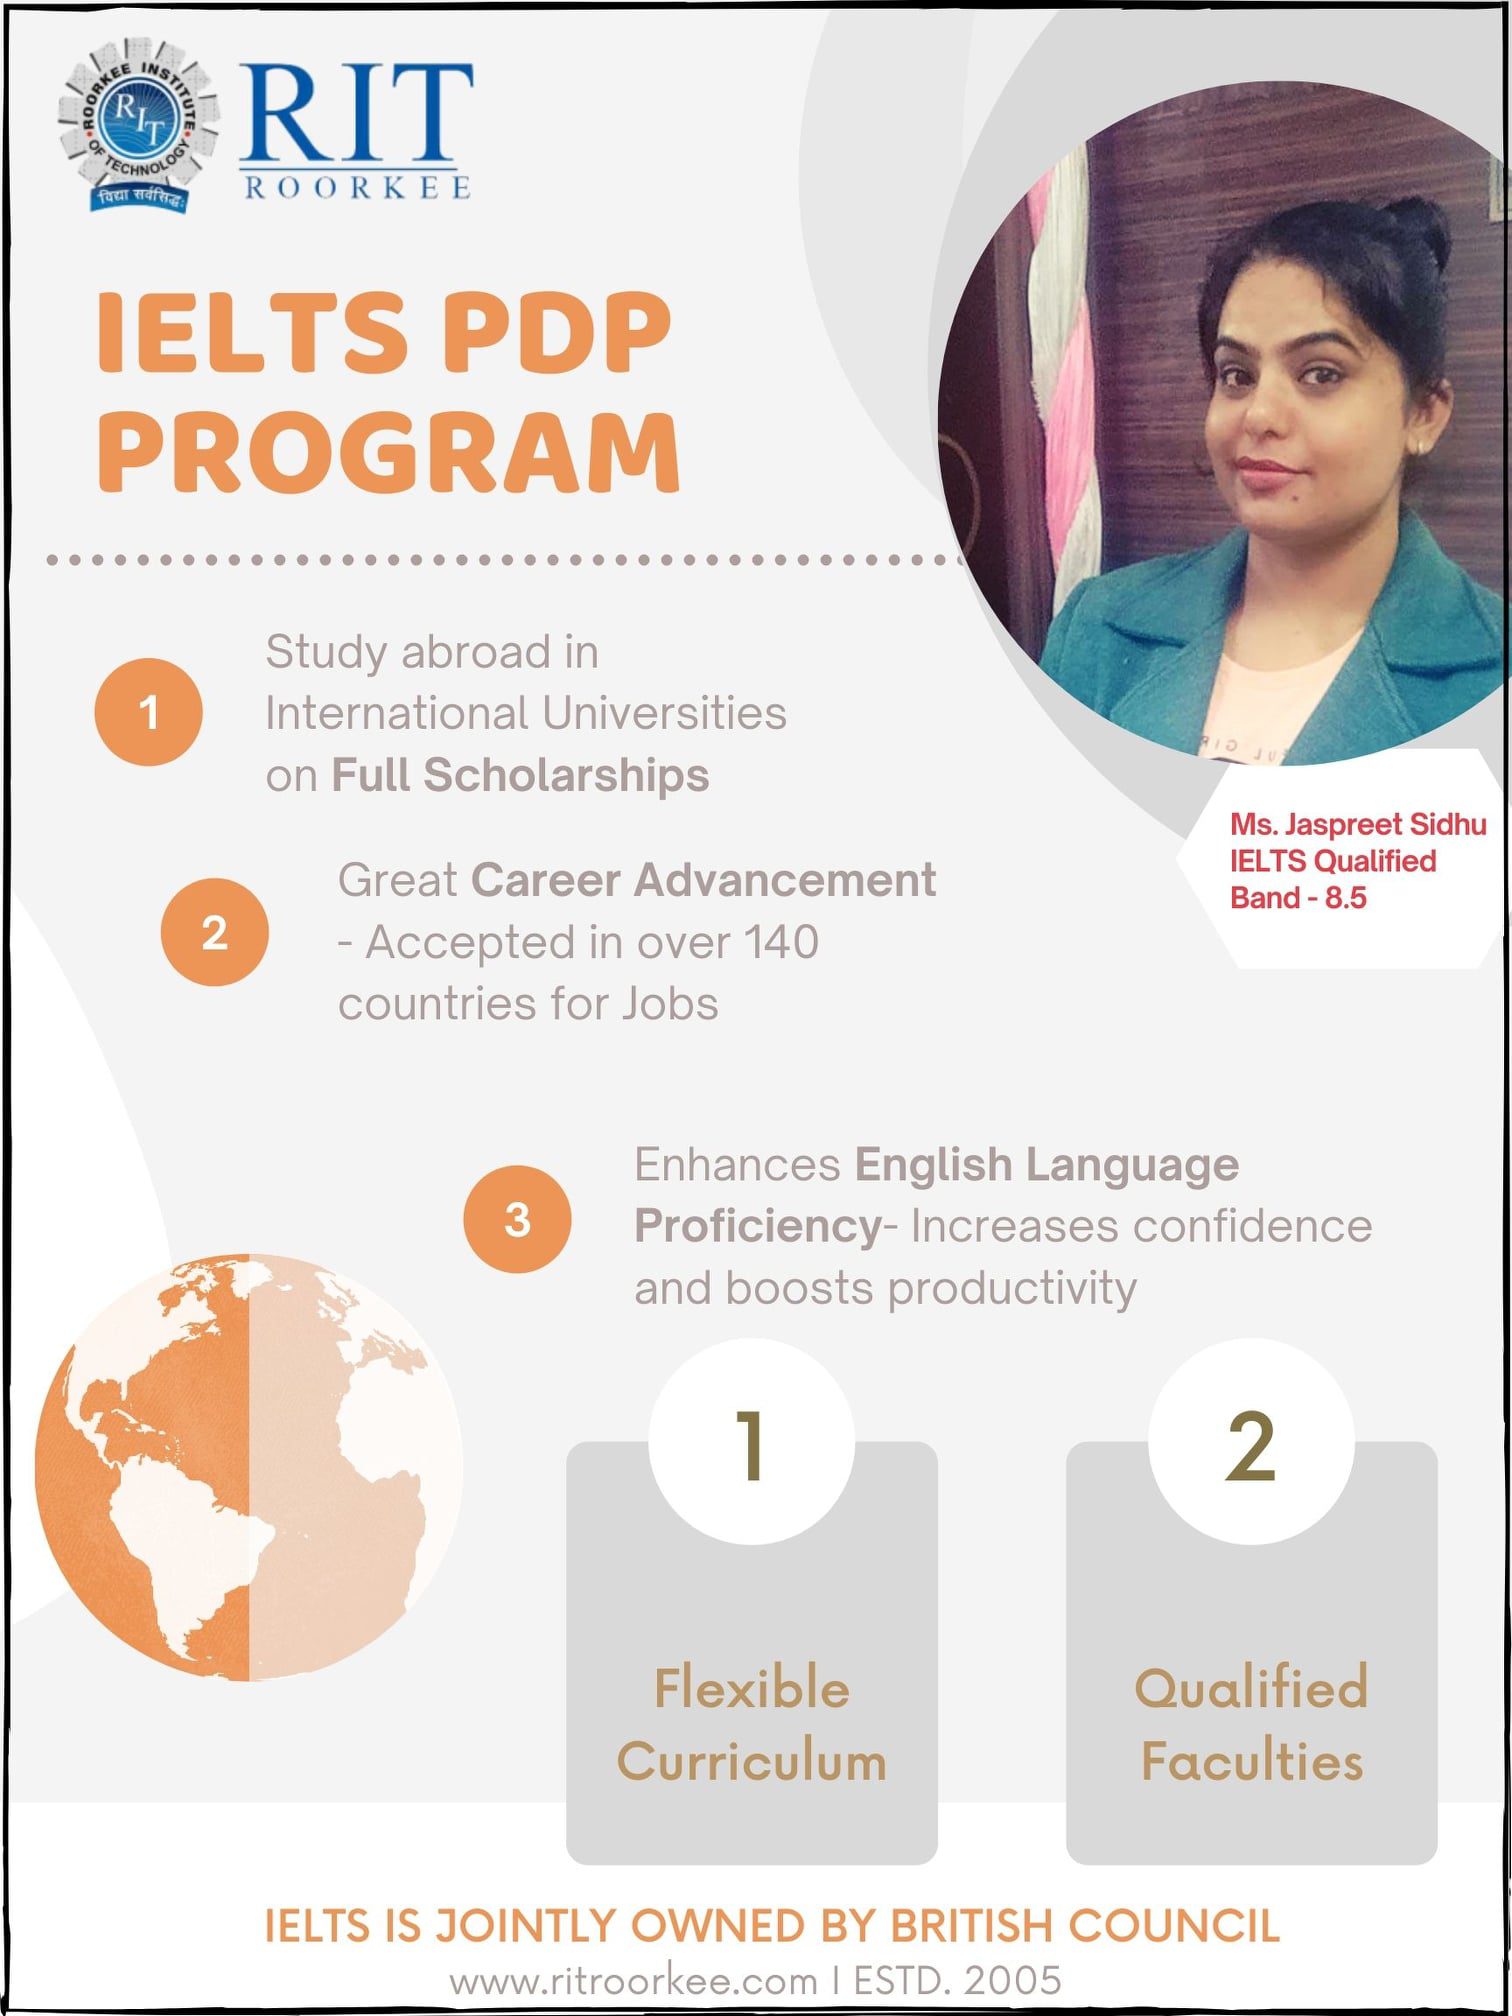 IELTS PDP program